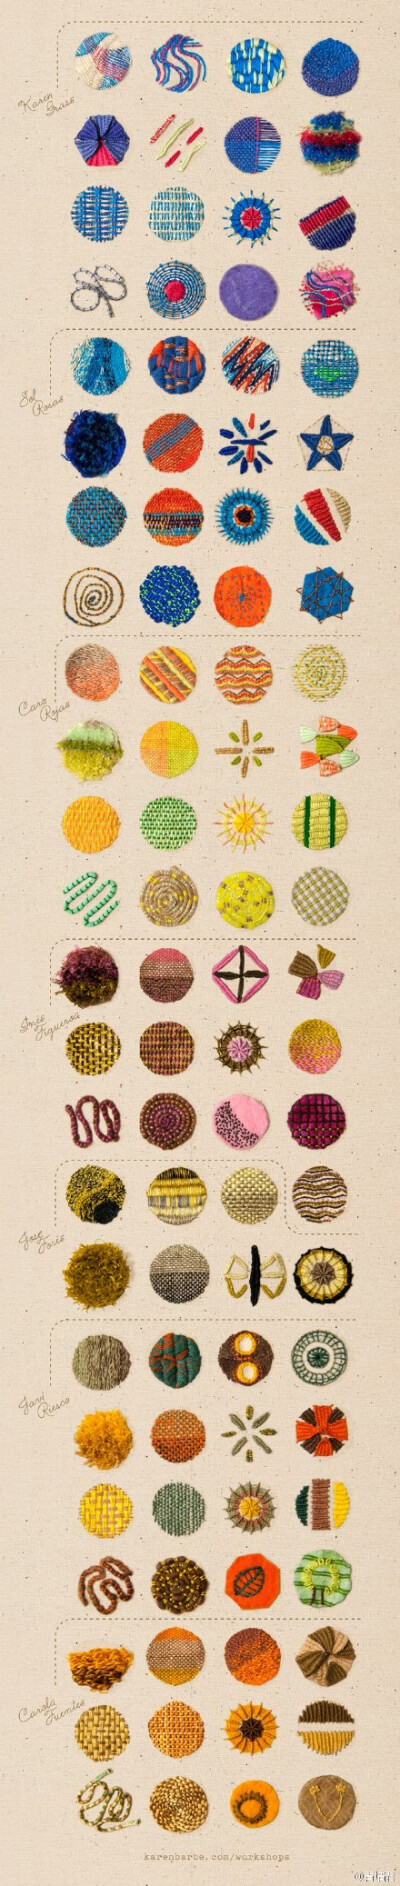 #96 embroidery samples# 96个刺绣纹样。这是瑞典一个刺绣班的女士们反复研究出的作品集，很赞吧！看到心情就会好起来~共享之=。=